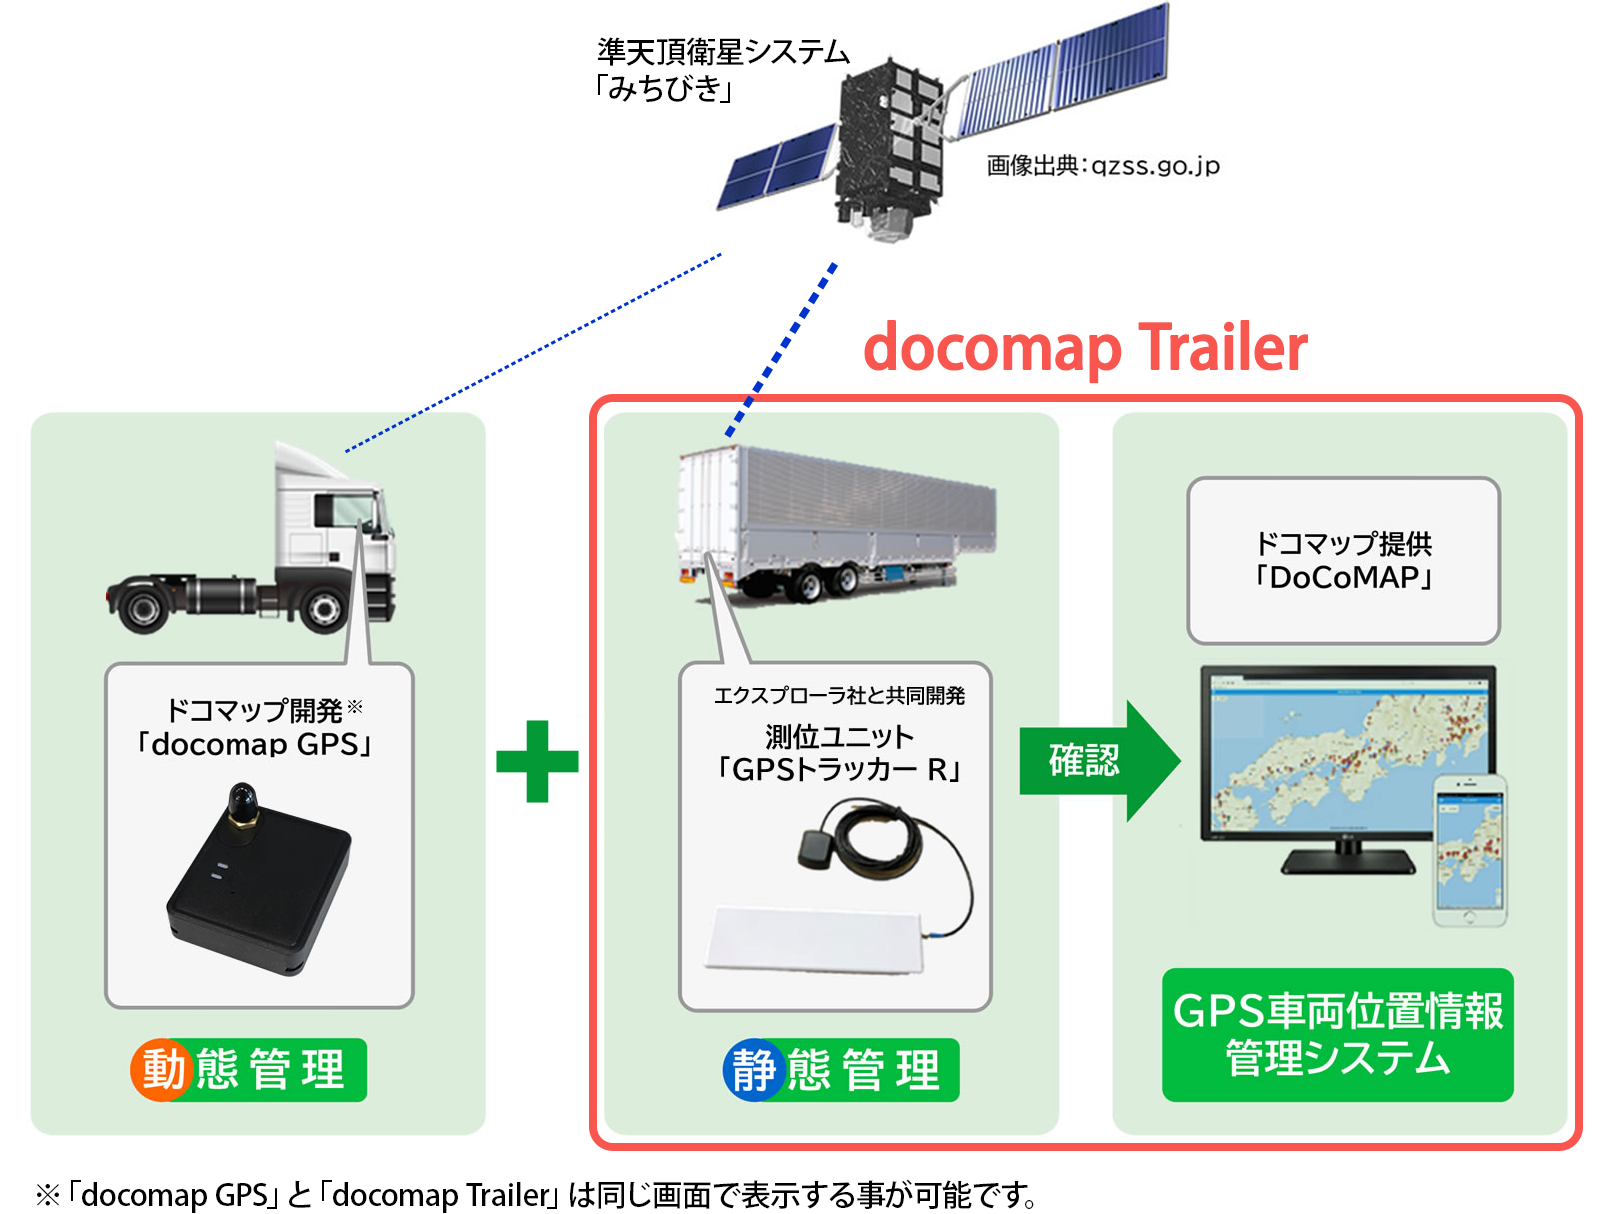 「docomap Trailer（GPSトラッカーR）」と「docomap GPS」の概要図